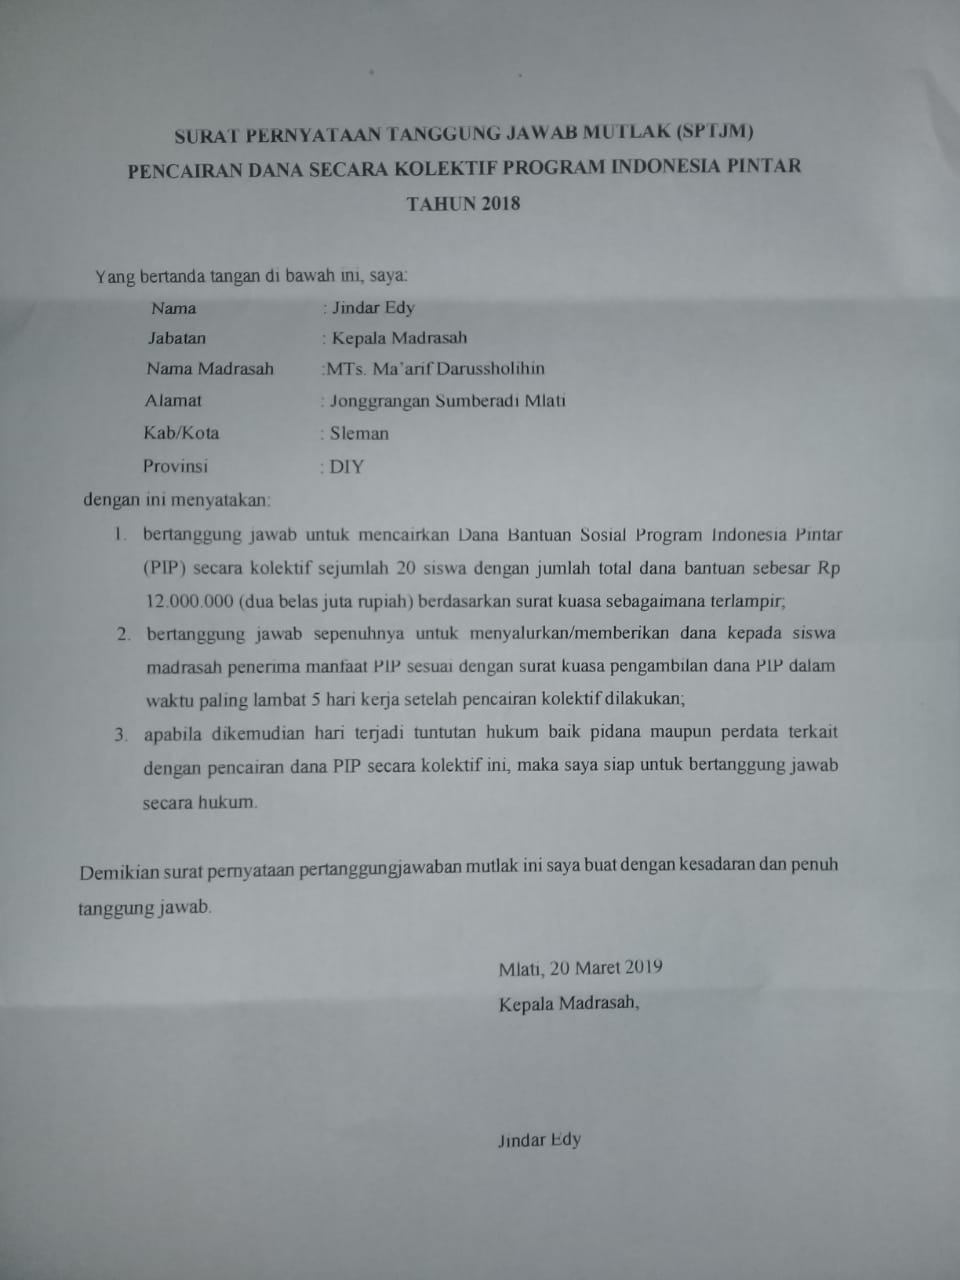 Contoh Surat Pernyataan Tanggung Jawab Mutlak Sptjm Pencairan Dana Program Indonesia Tar